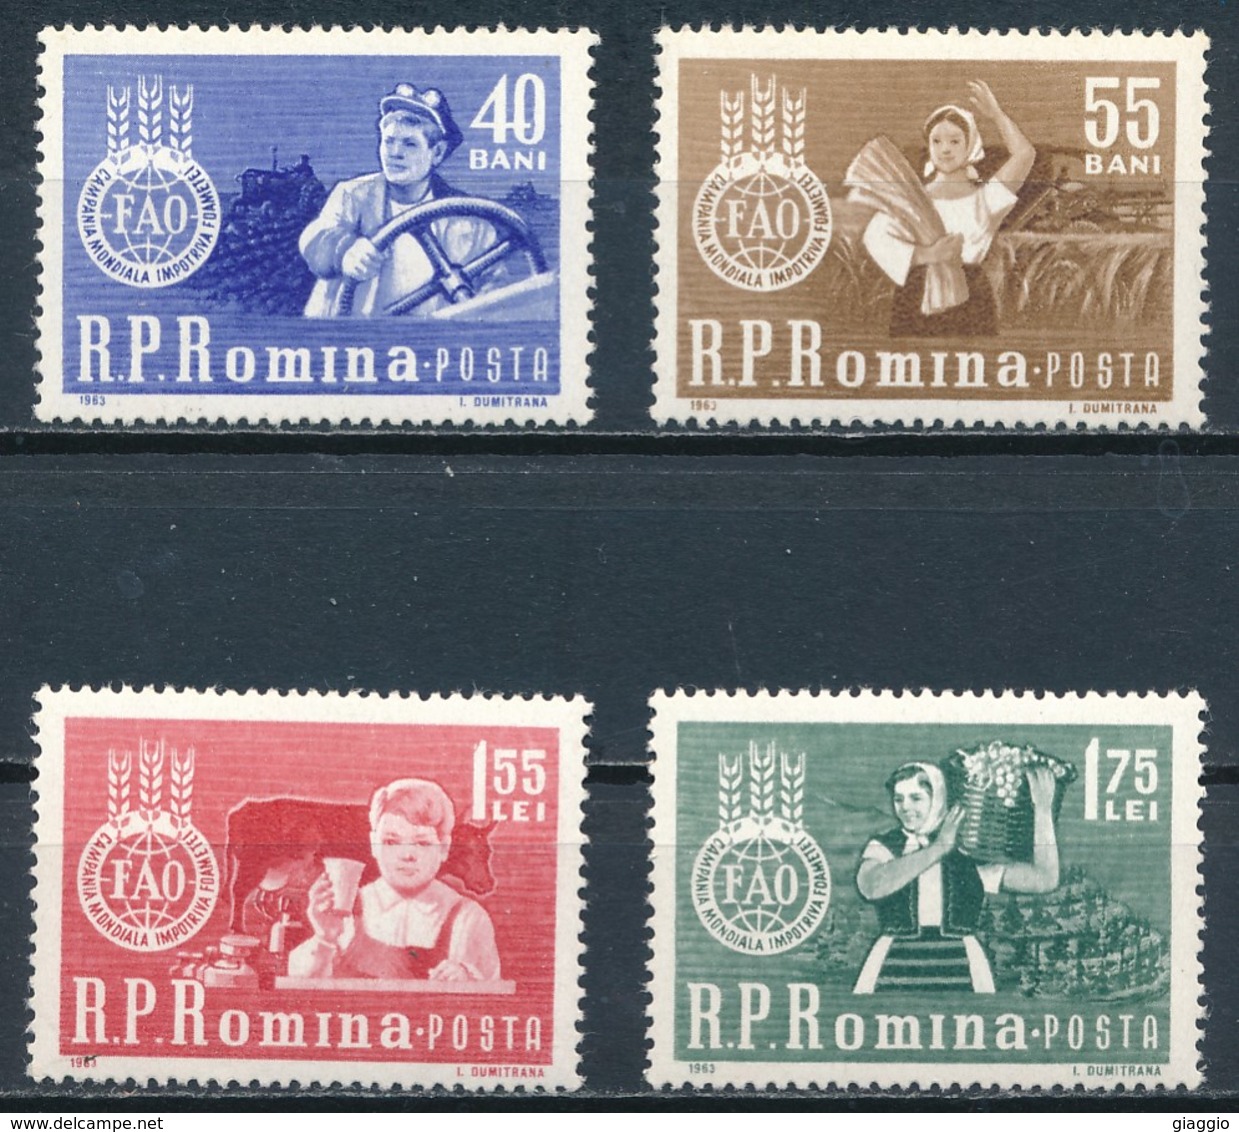 °°° ROMANIA - Y&T N°1897/2000 - 1963 MNH °°° - Nuovi